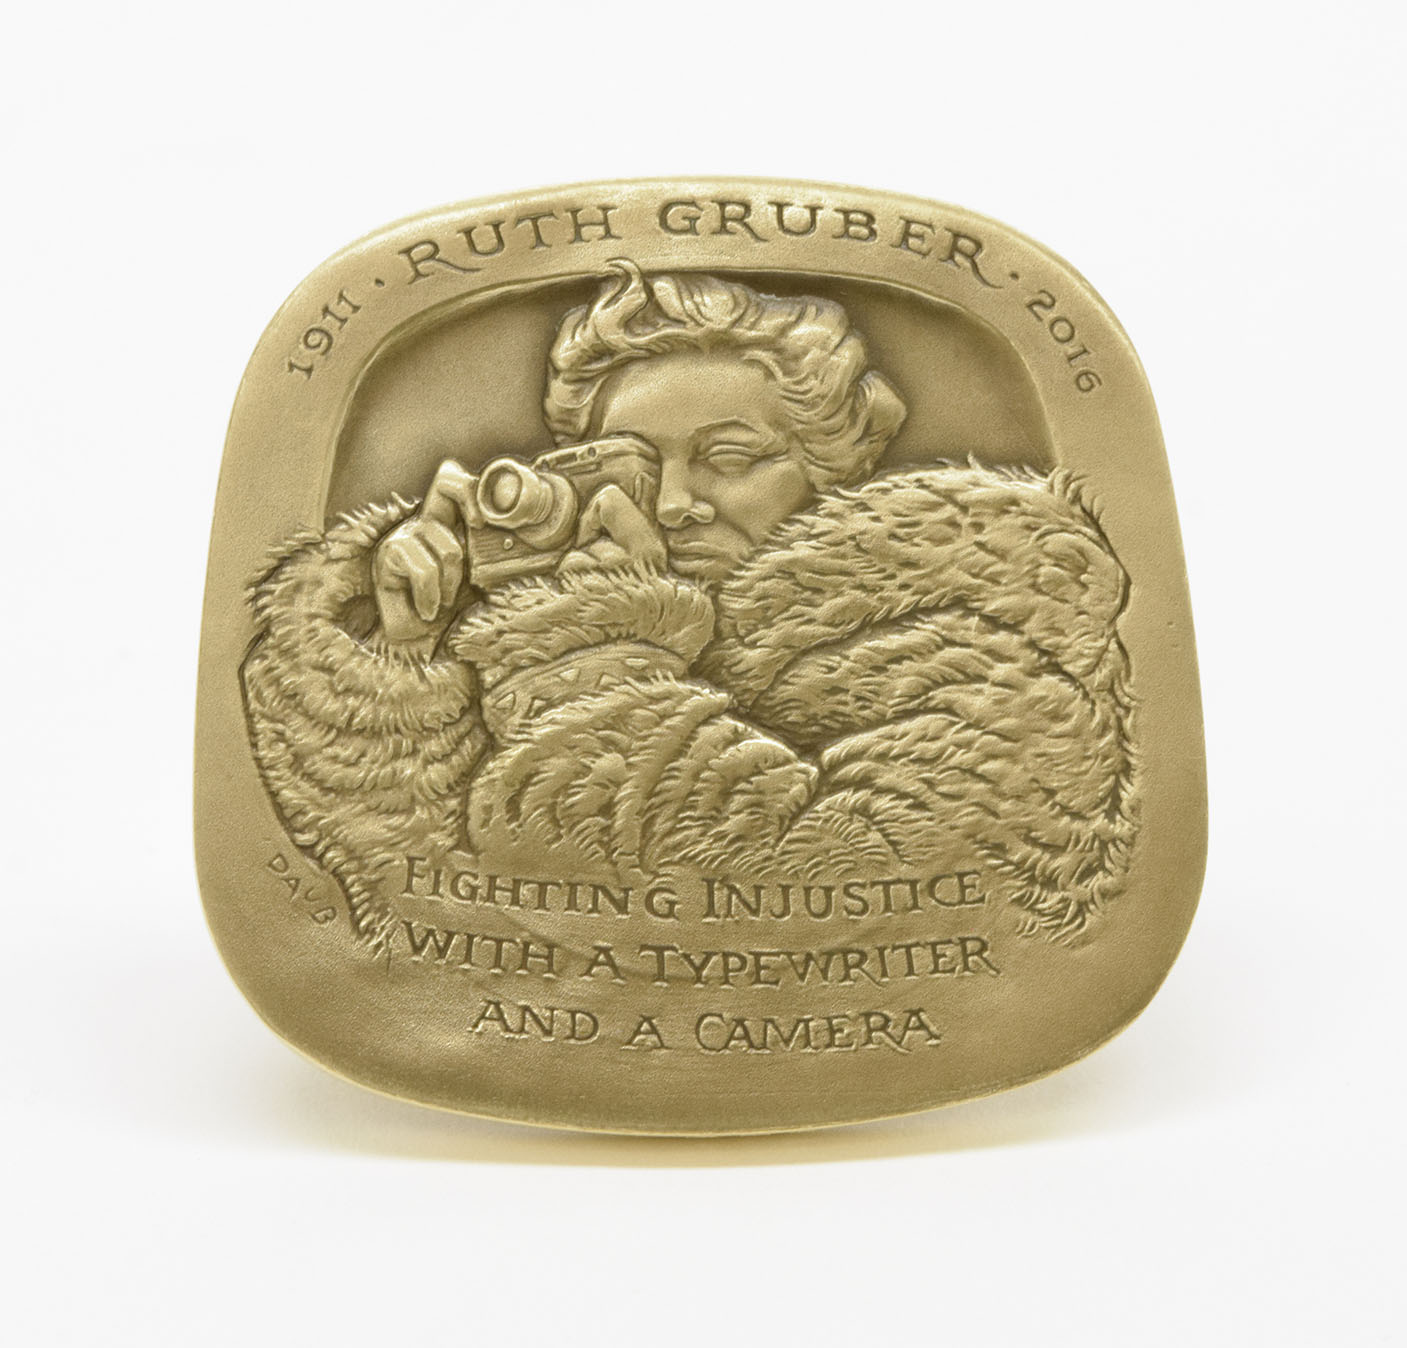 Ruth Gruber Medal